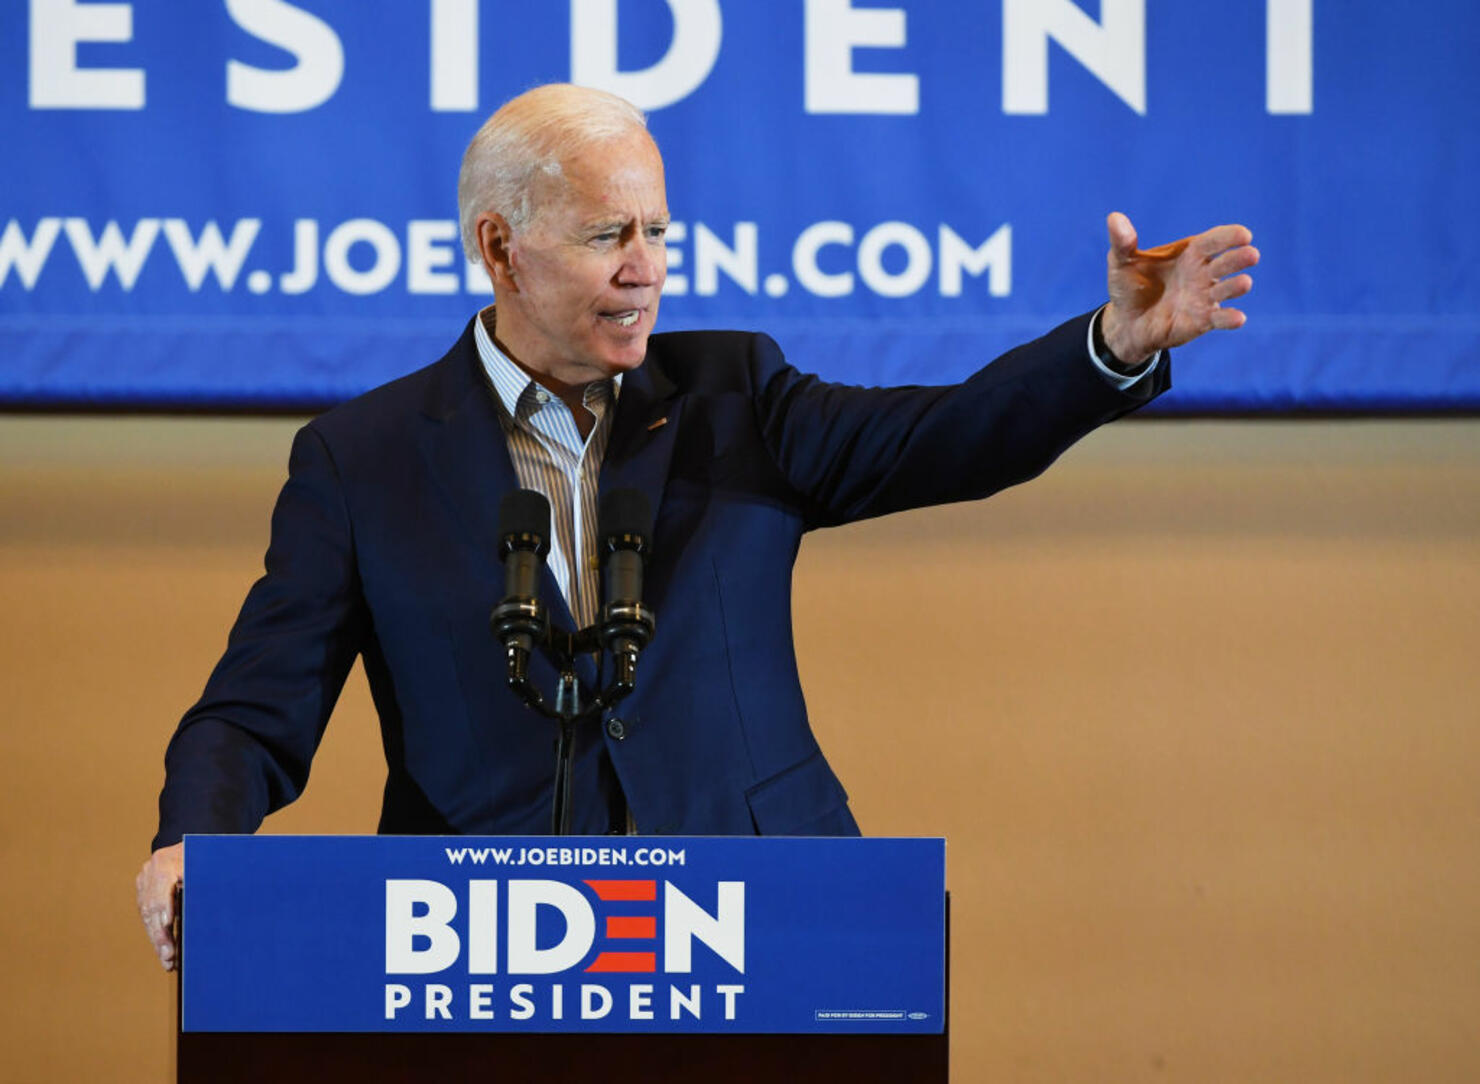 Joe Biden Takes His Presidential Campaign To Nevada